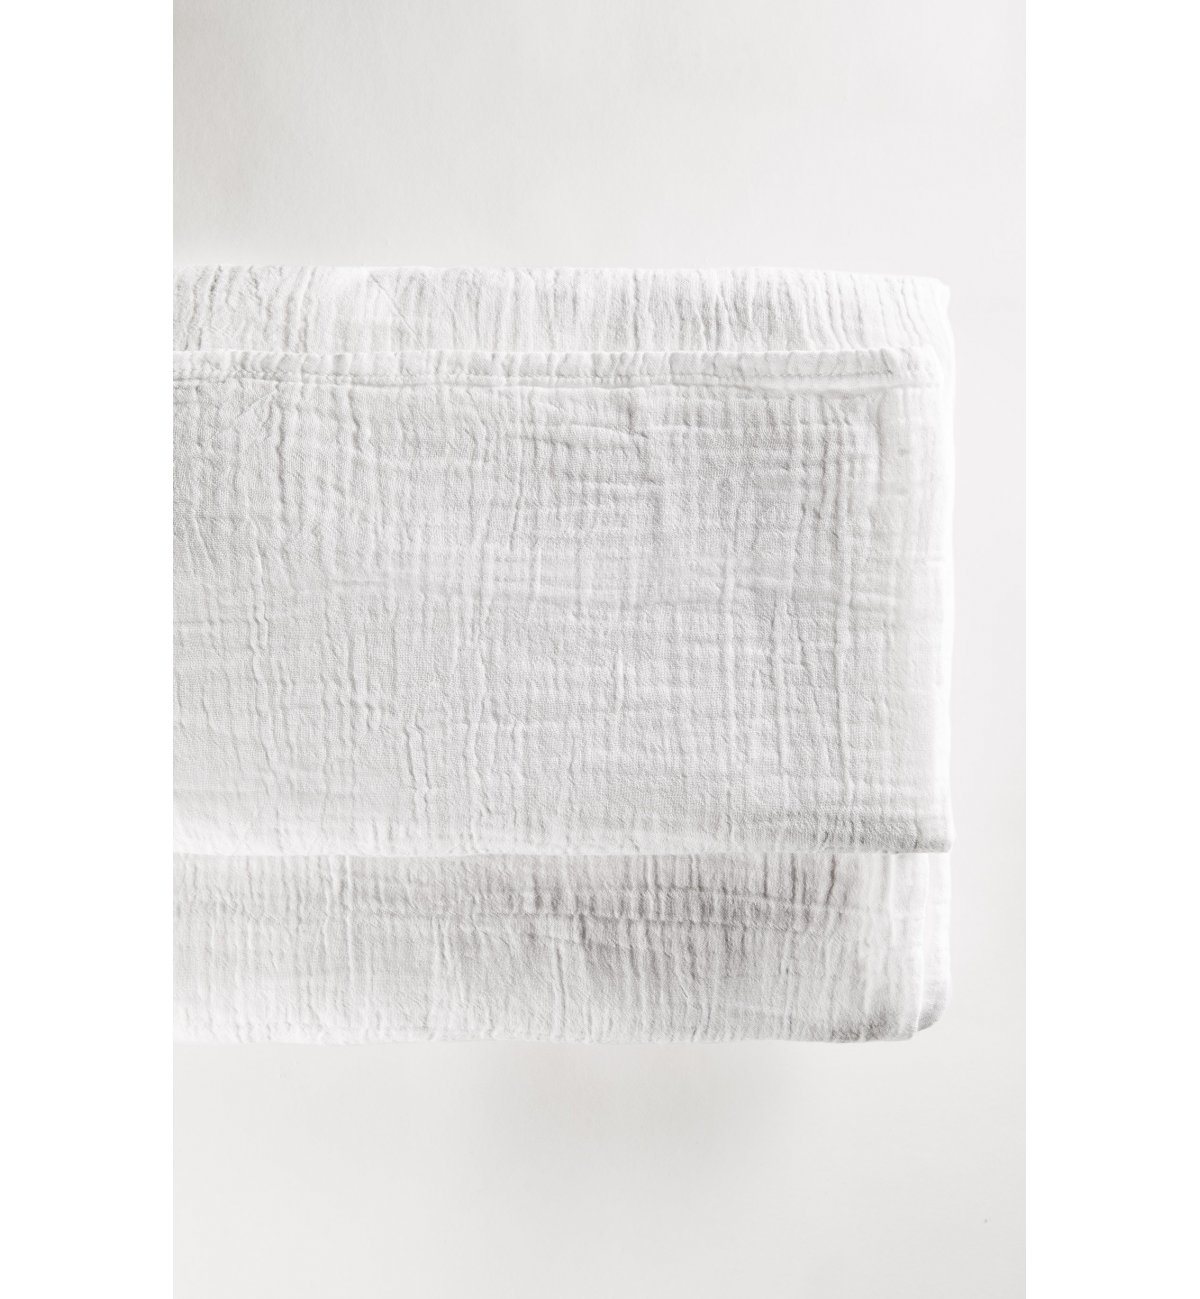 Flat sheet for baby bed Organic cotton crumpled - Kadolis